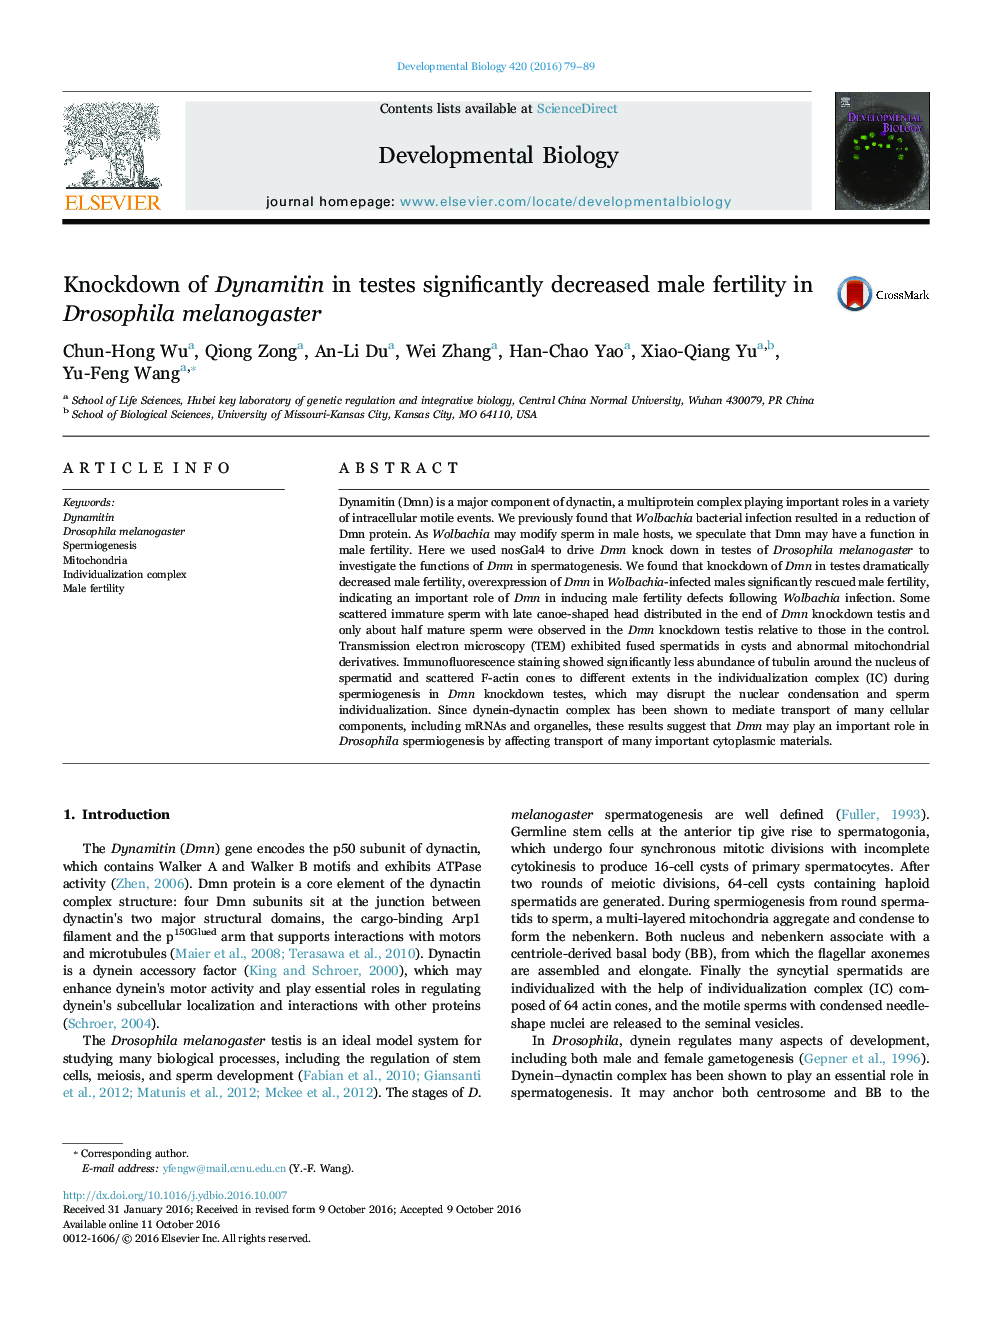 Knockdown of Dynamitin in testes significantly decreased male fertility in Drosophila melanogaster